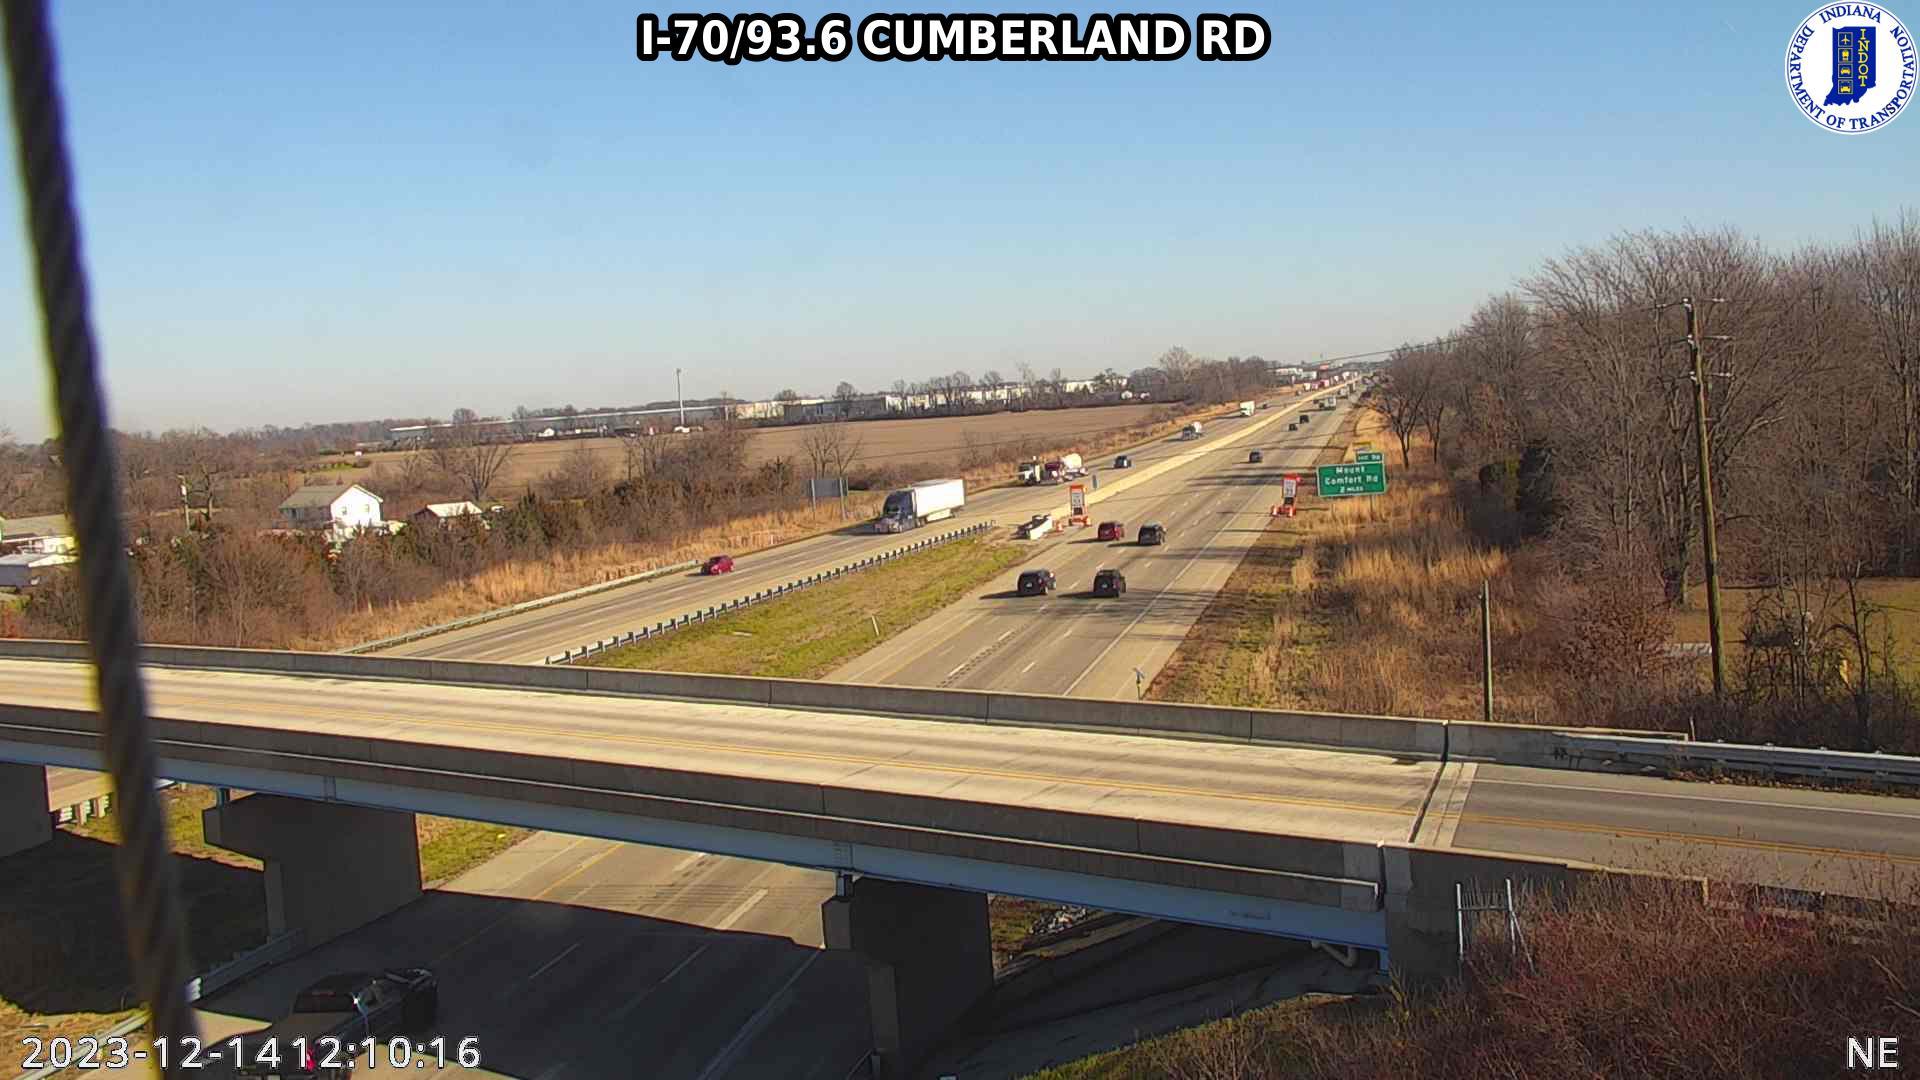 Indianapolis: I-70: I-70/93.6 CUMBERLAND RD Traffic Camera